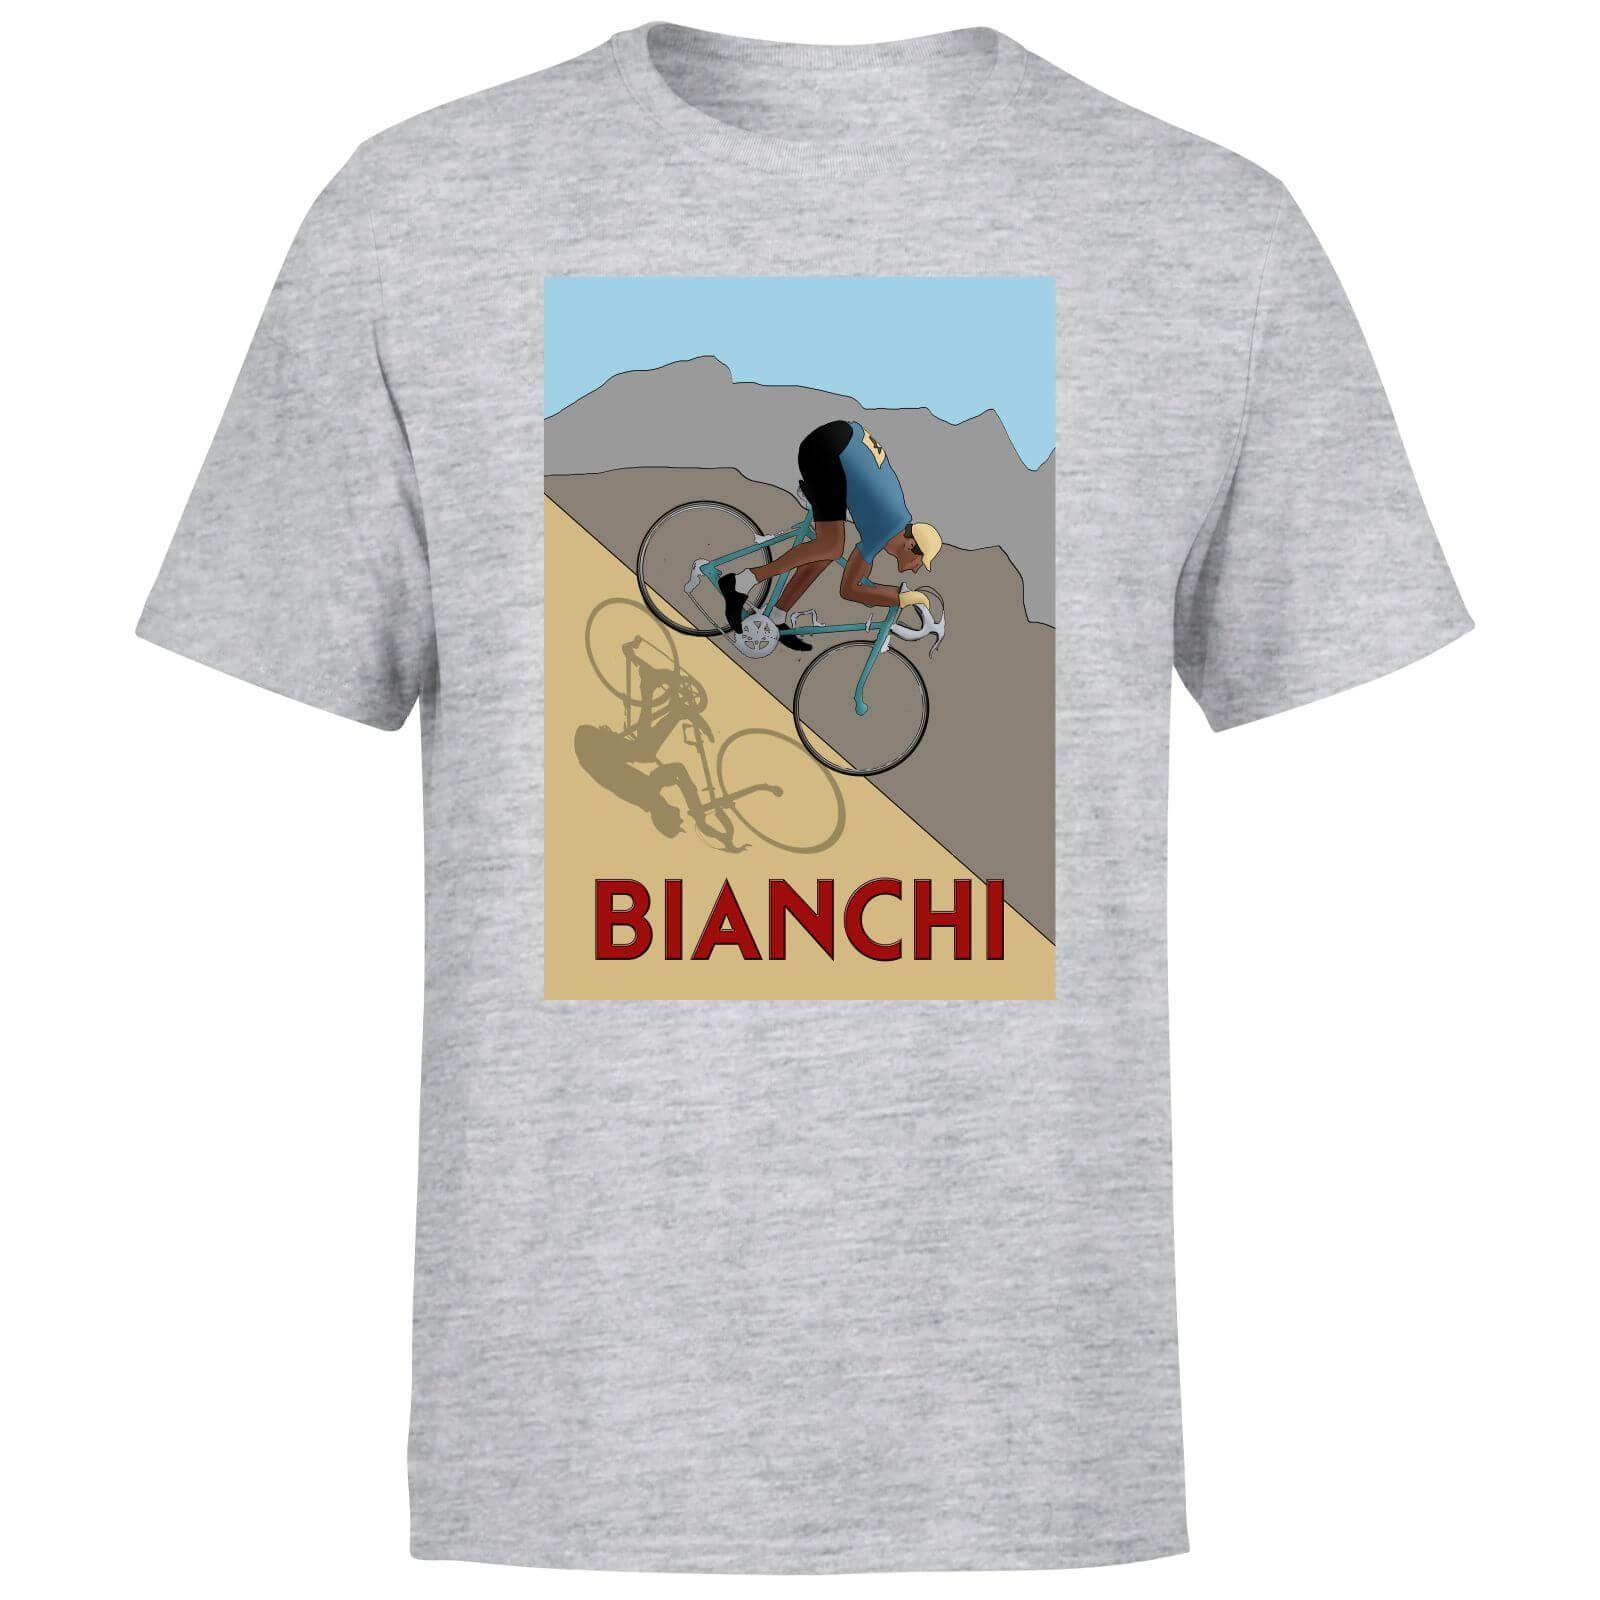 Bianchi Men's T-Shirt - Grey - L - Grey